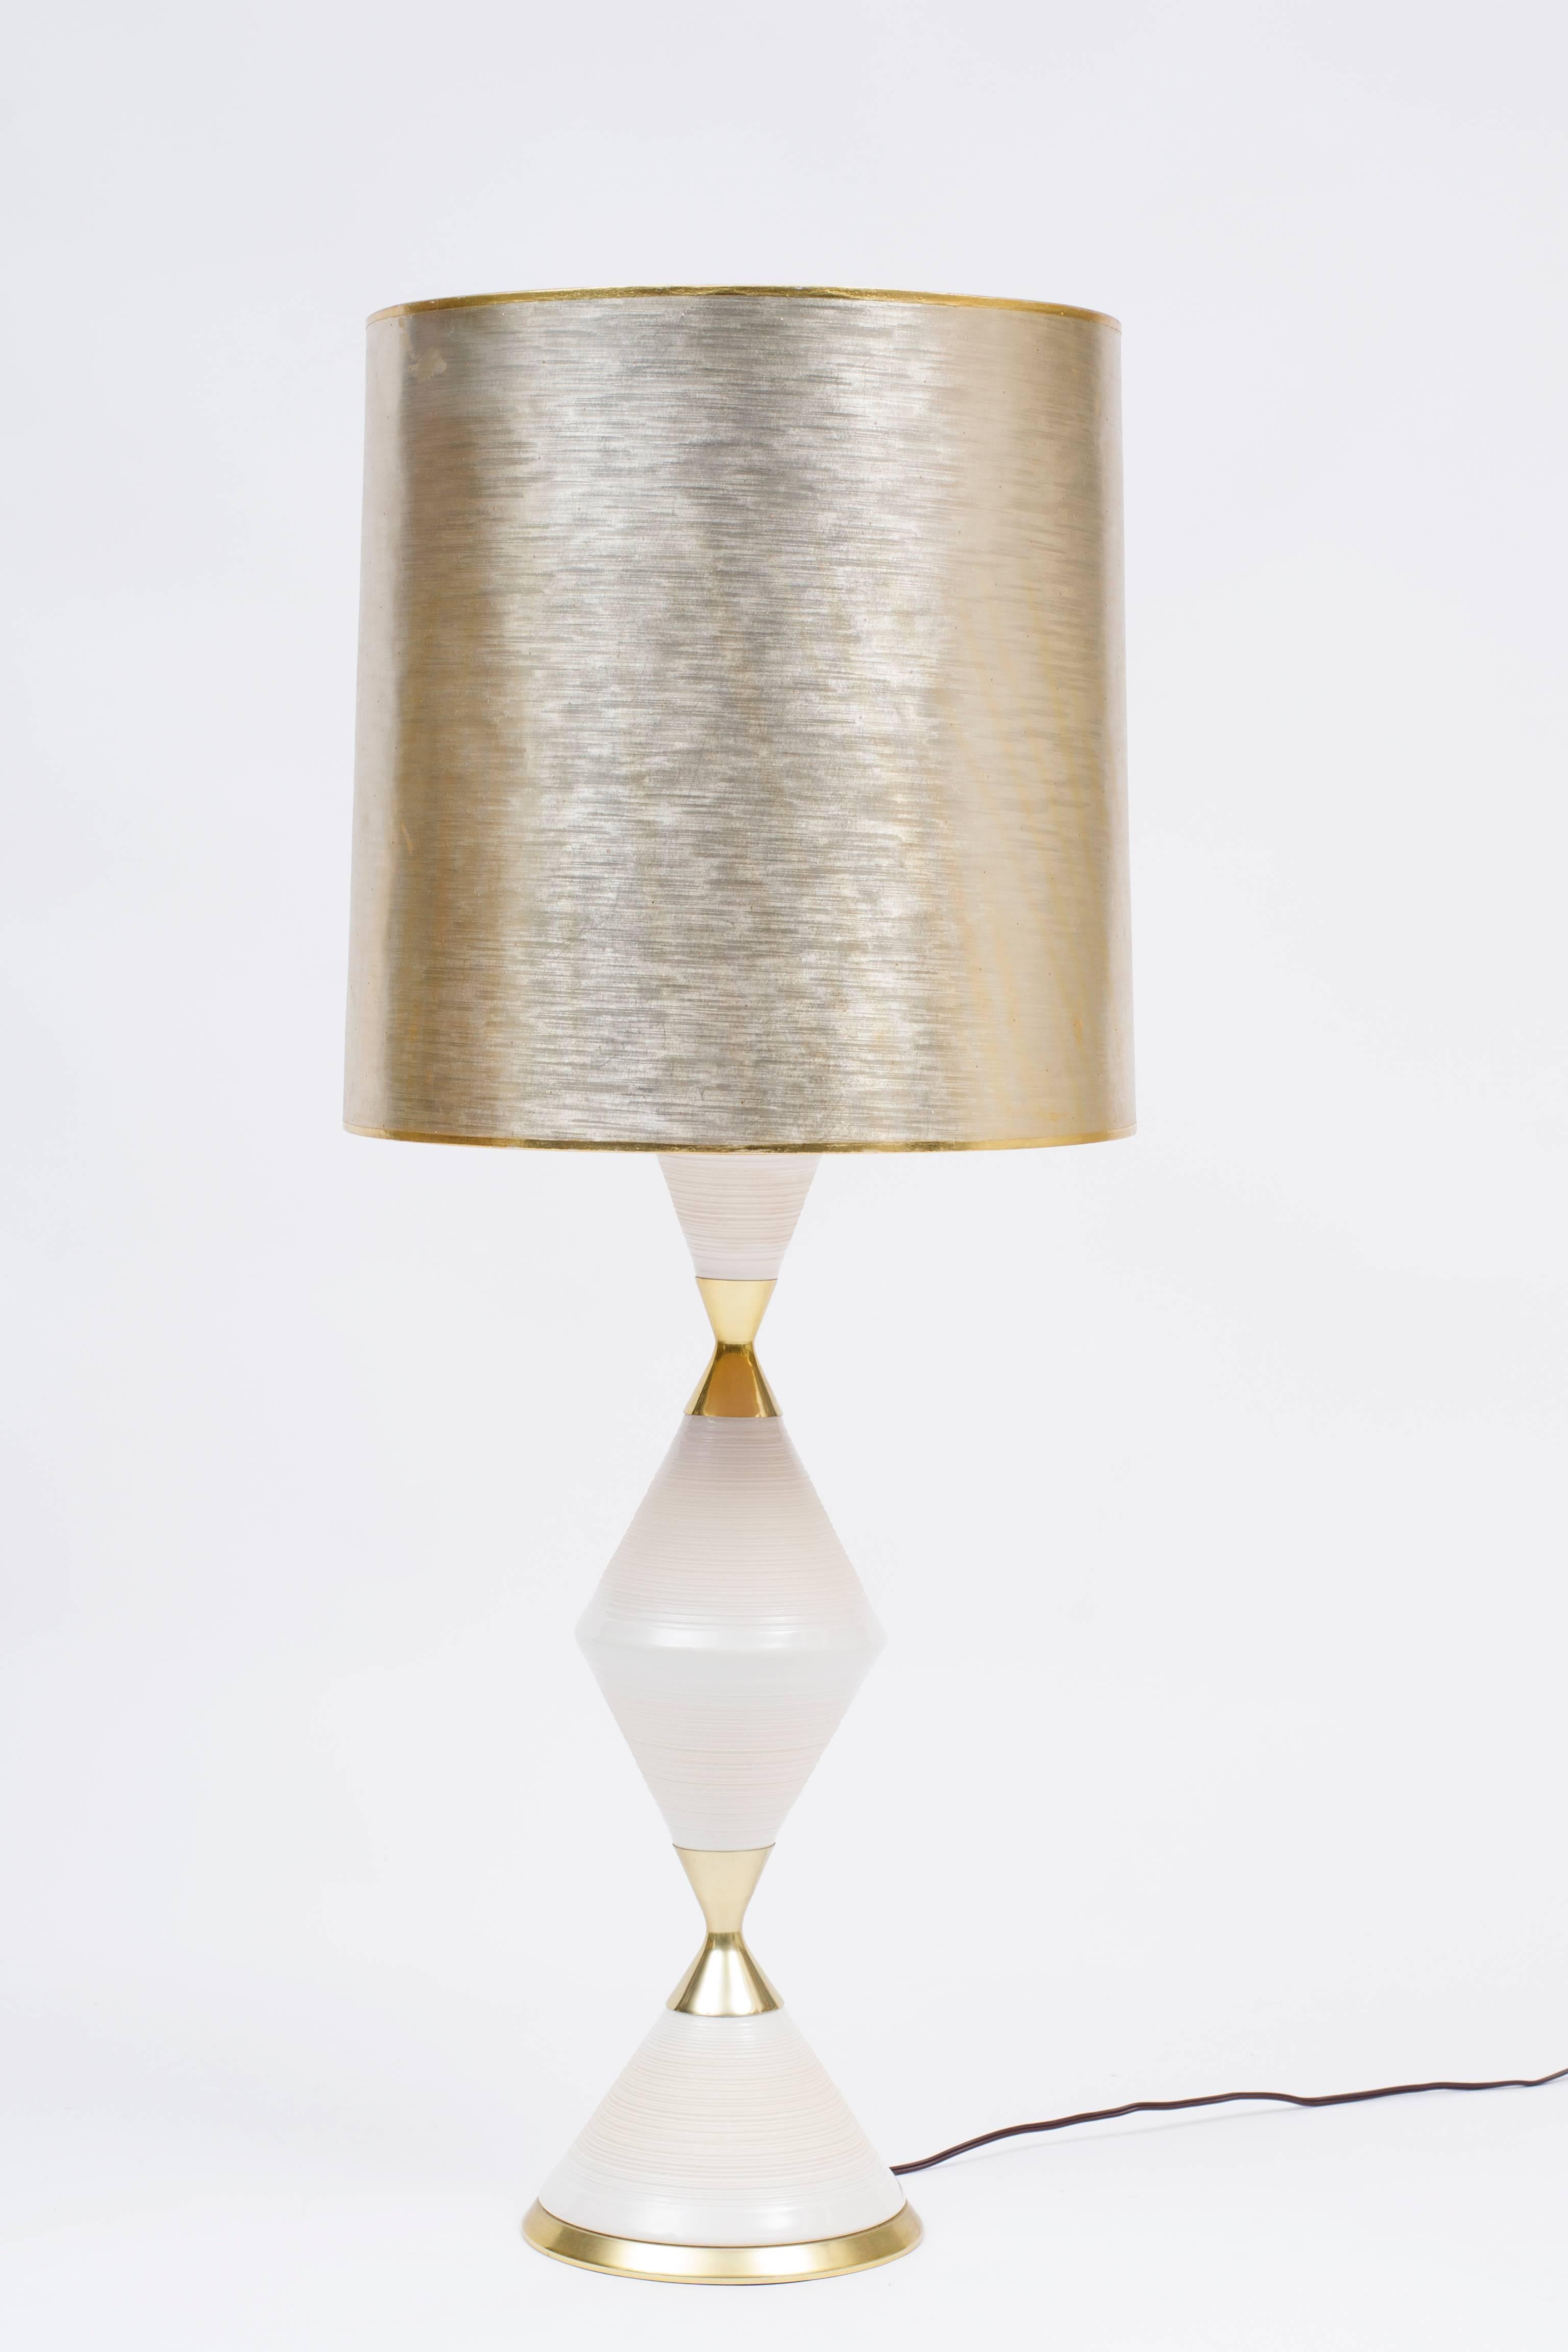 Mid-Century Modern Porcelain Table Lamp by Gerald Thurston for Lightolier, 1950s For Sale